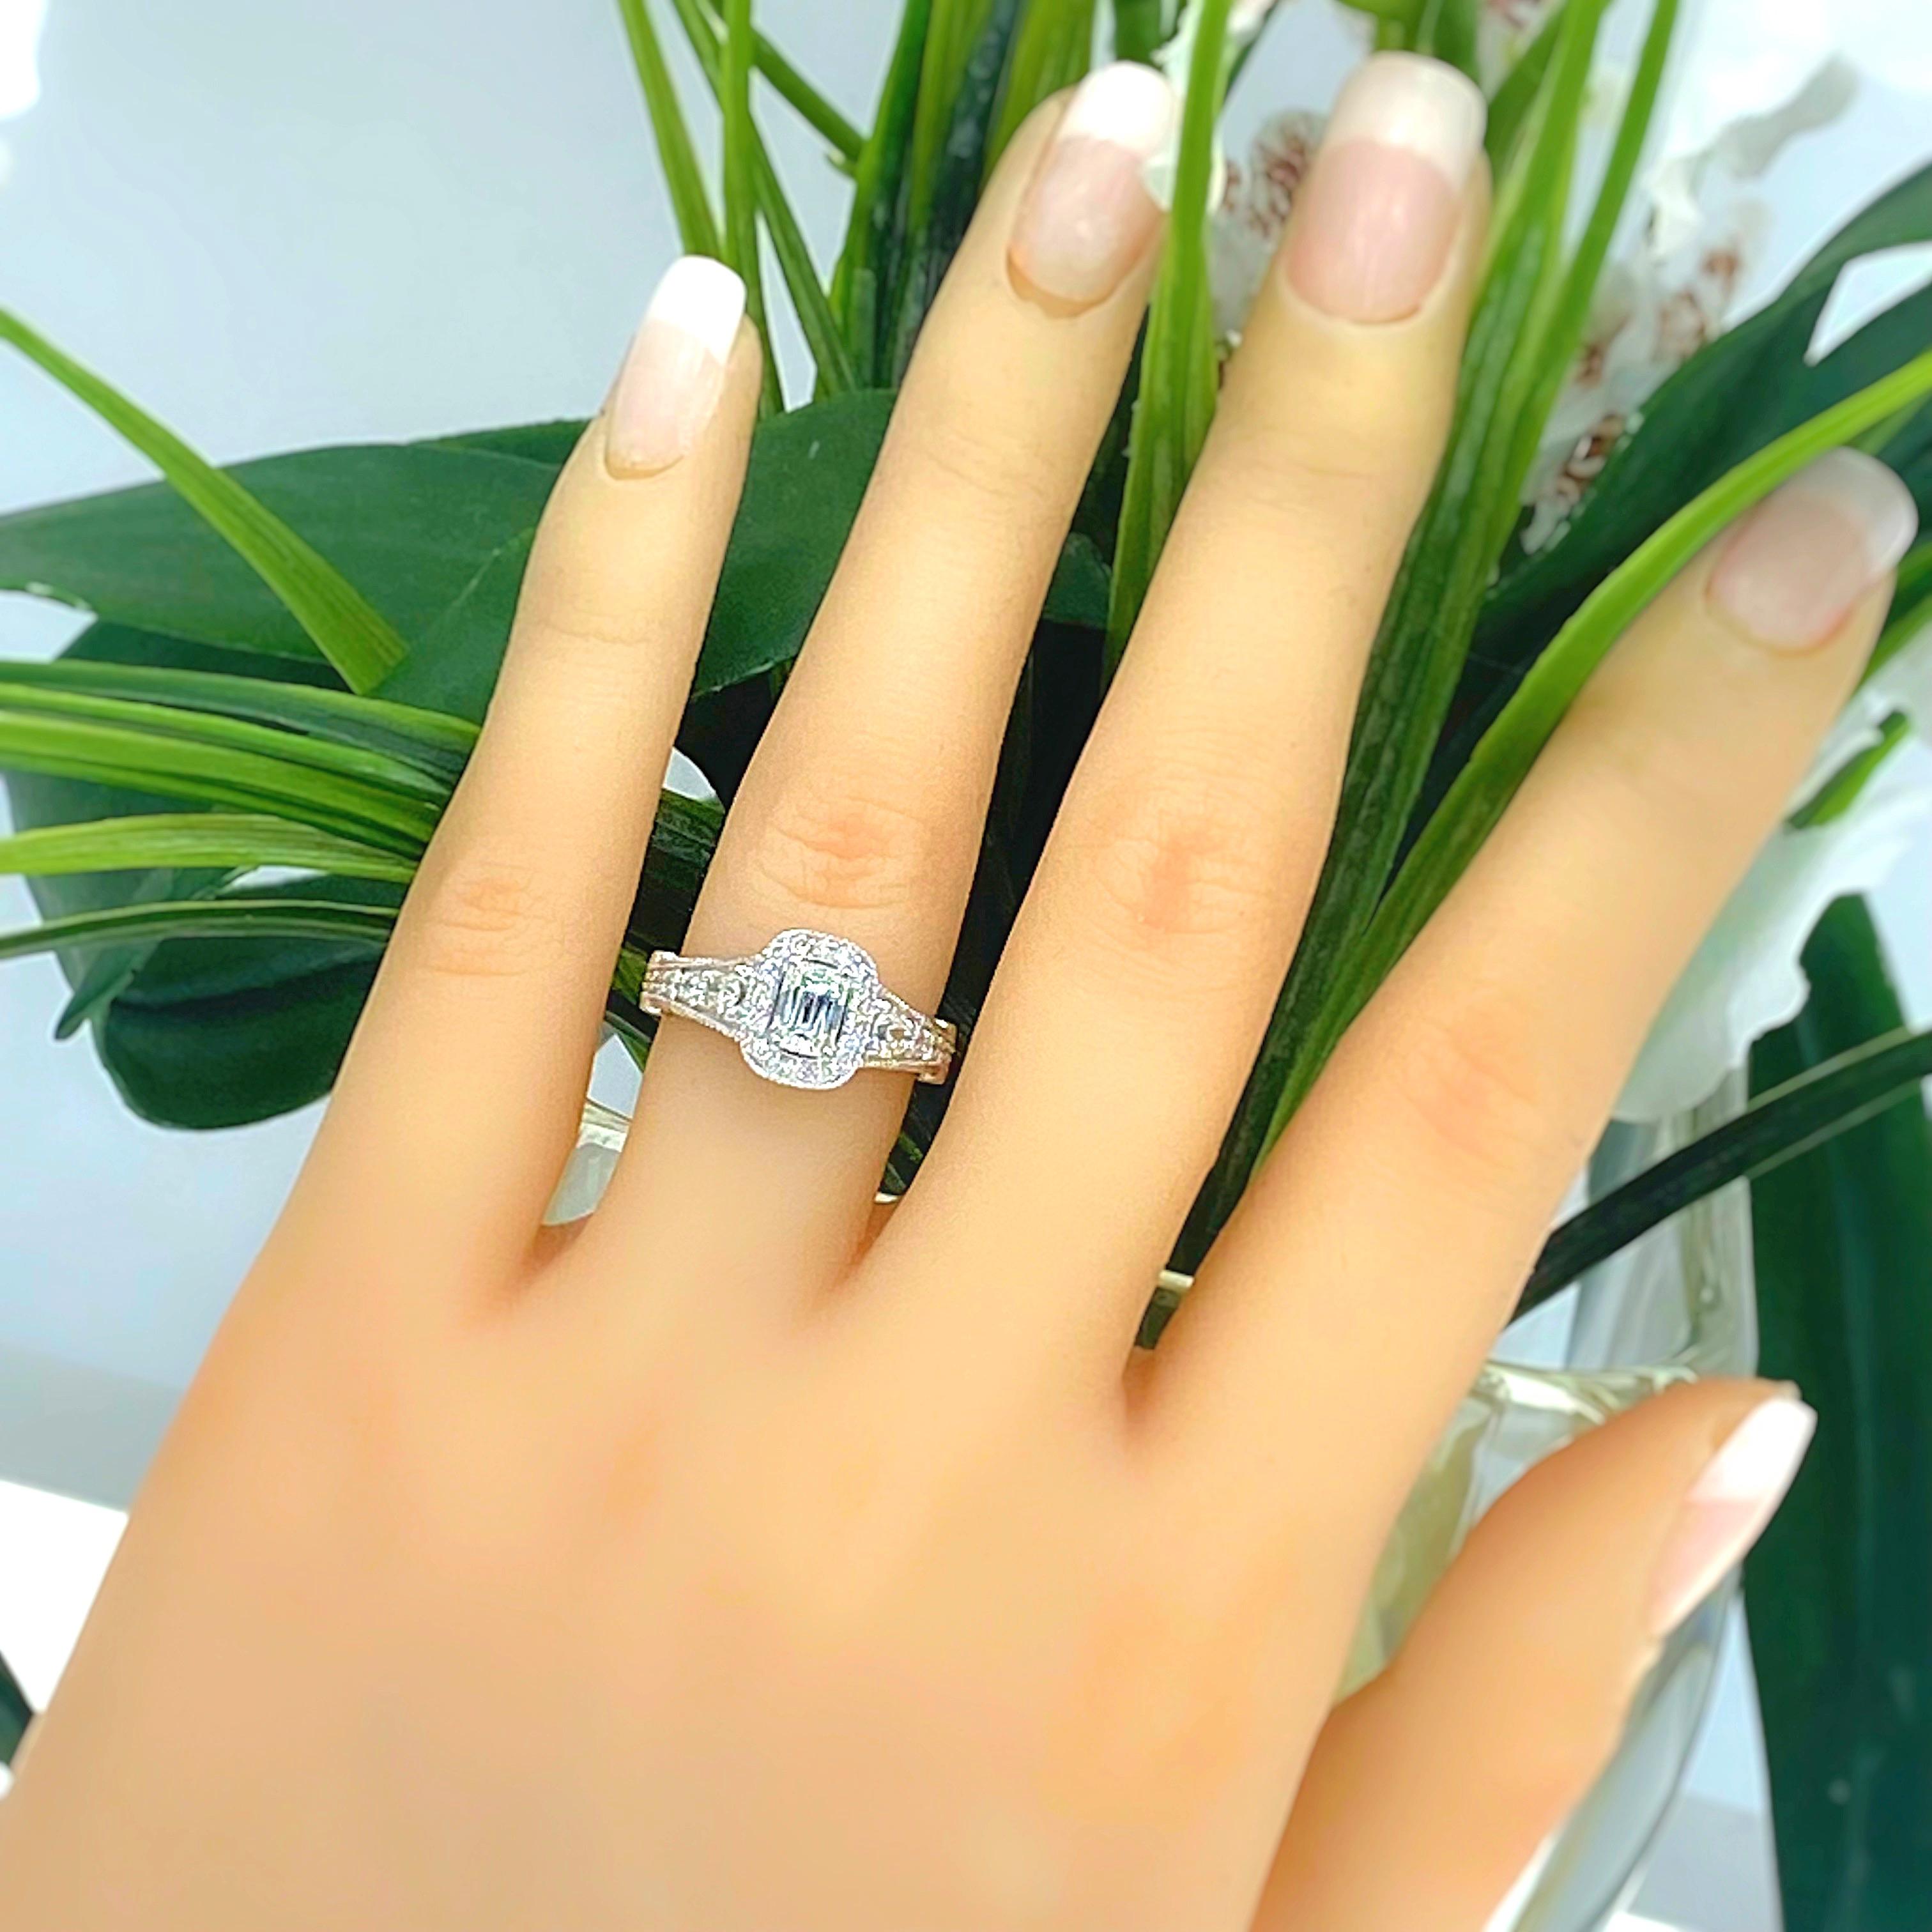 Christopher Designs CRISSCUT Diamond Halo Engagement Ring
Style:  Pave Halo
Metal:  18kt White Gold
Size:  6  sizable
TCW:  2.00 tcw
Main Diamond:  Crisscut Diamond ( Emerald Cut ) 0.75 cts
Color & Clarity:  G, VS1
Accent Diamonds:  86 Crisscut